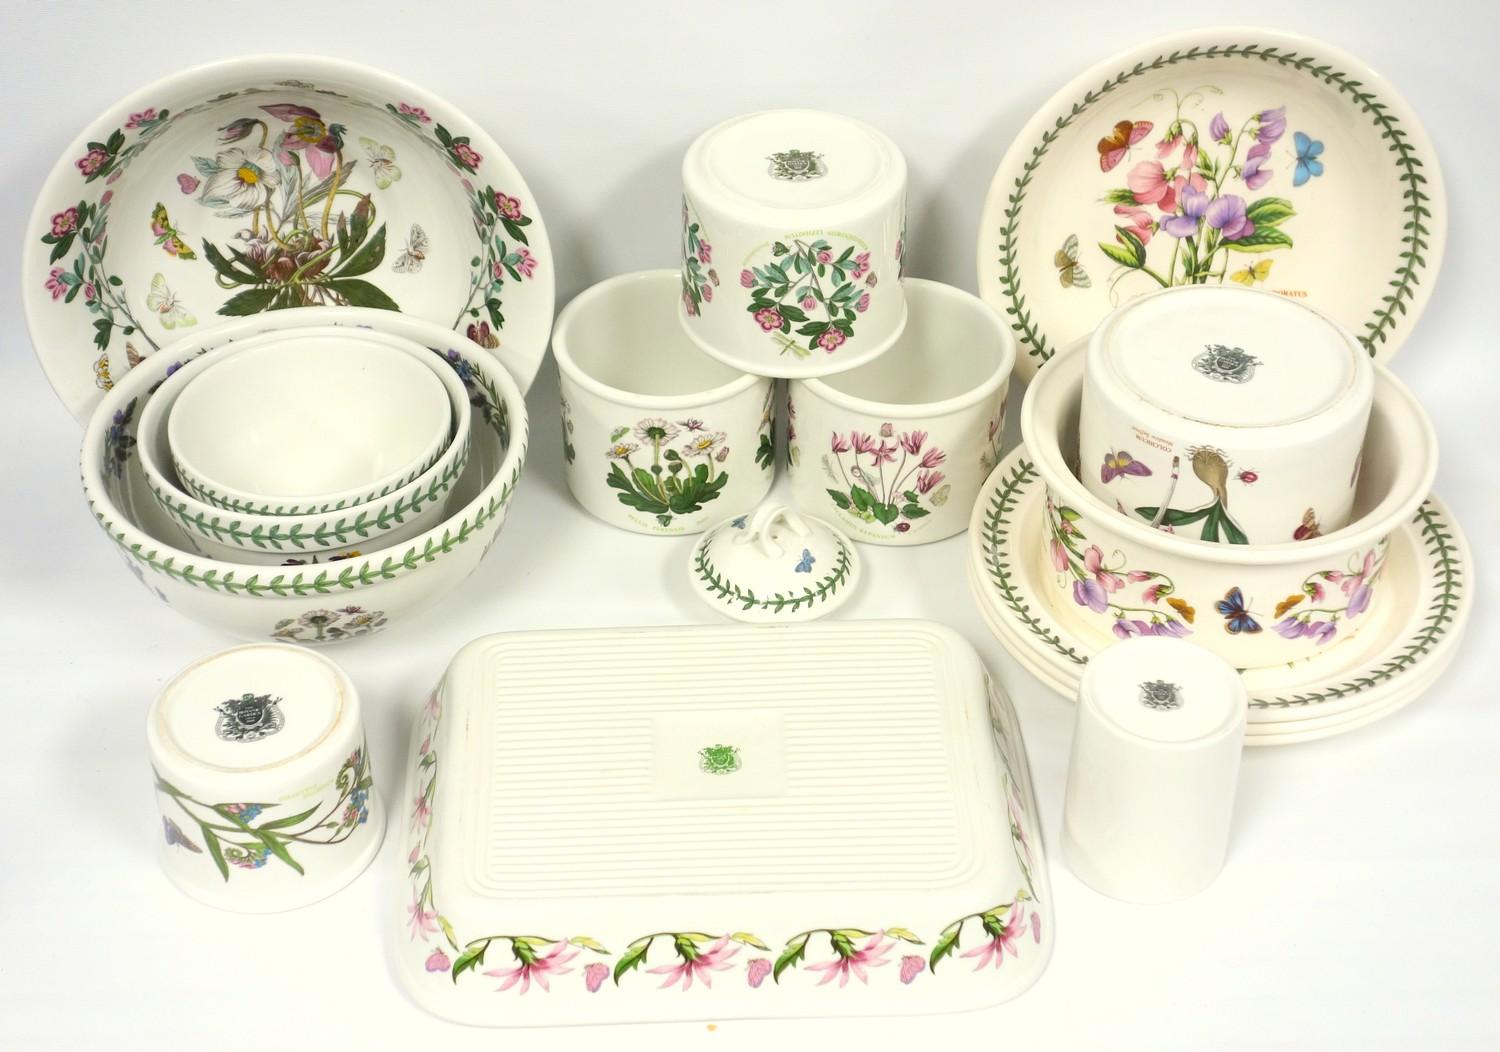 Large quantity of Portmeirion, Botanic garden, including serving dishes, bowls, plates, tea set, - Image 4 of 4